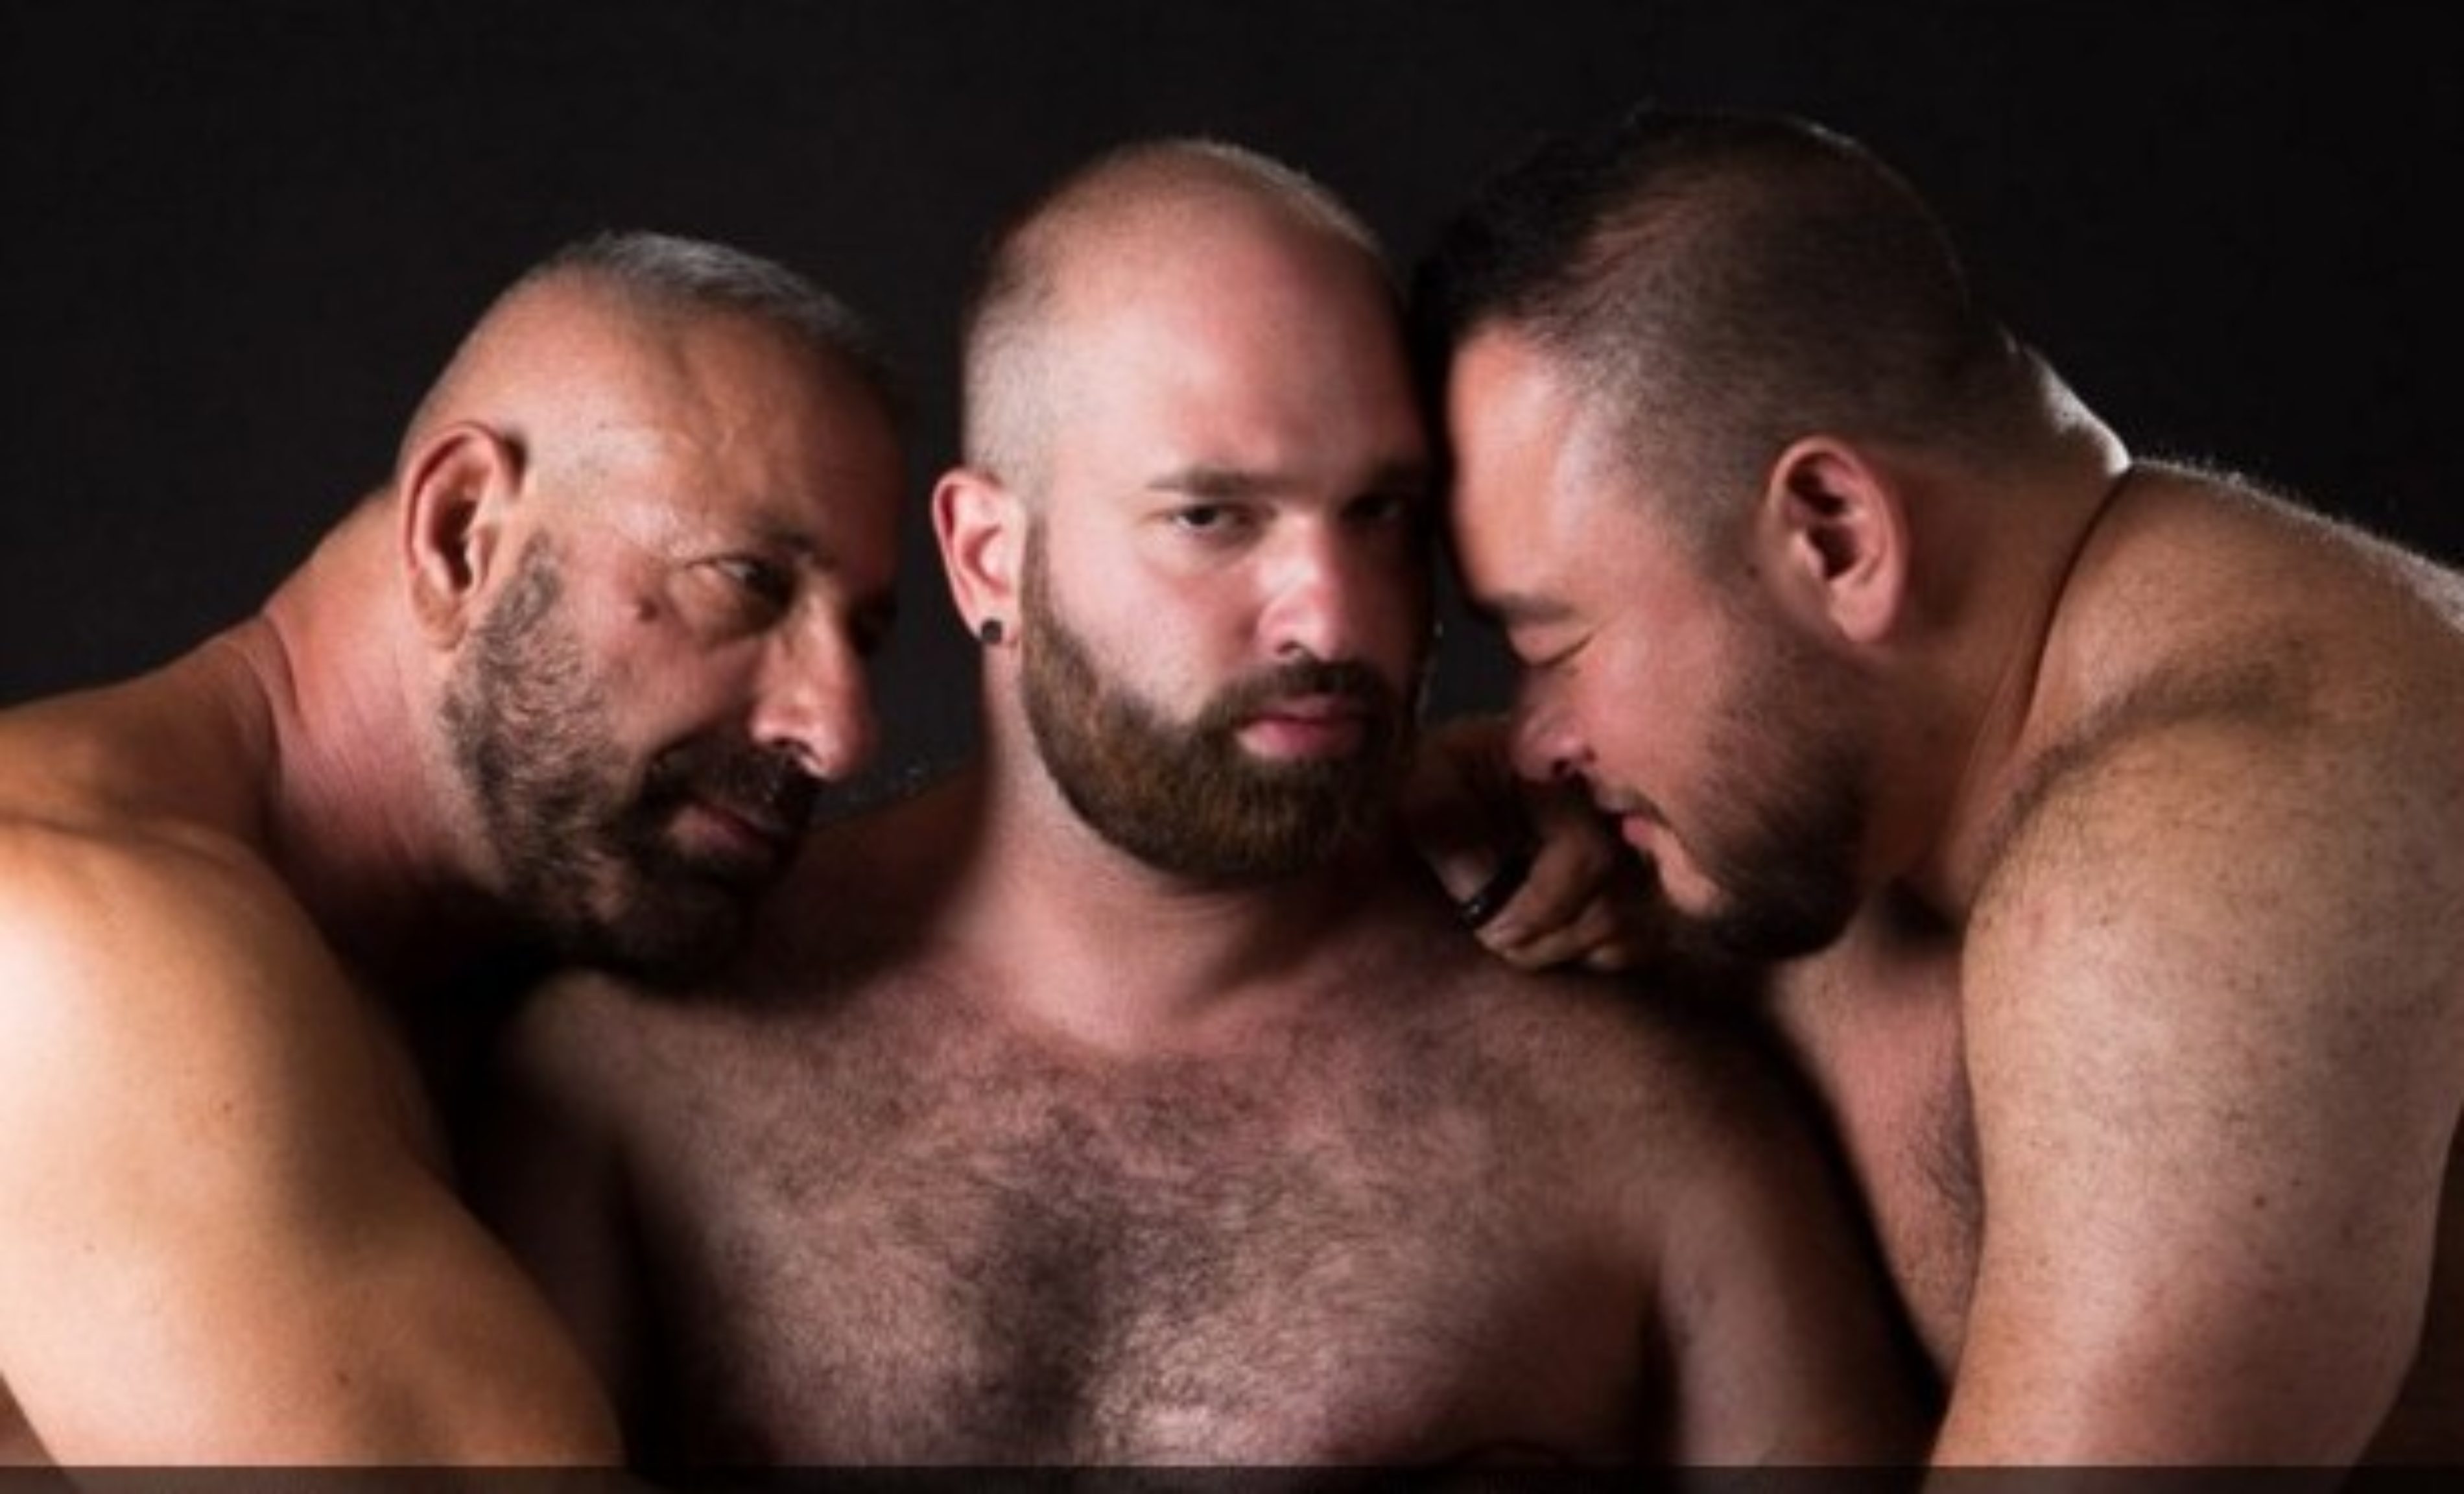 Three gay men speak of their three-way relationship.